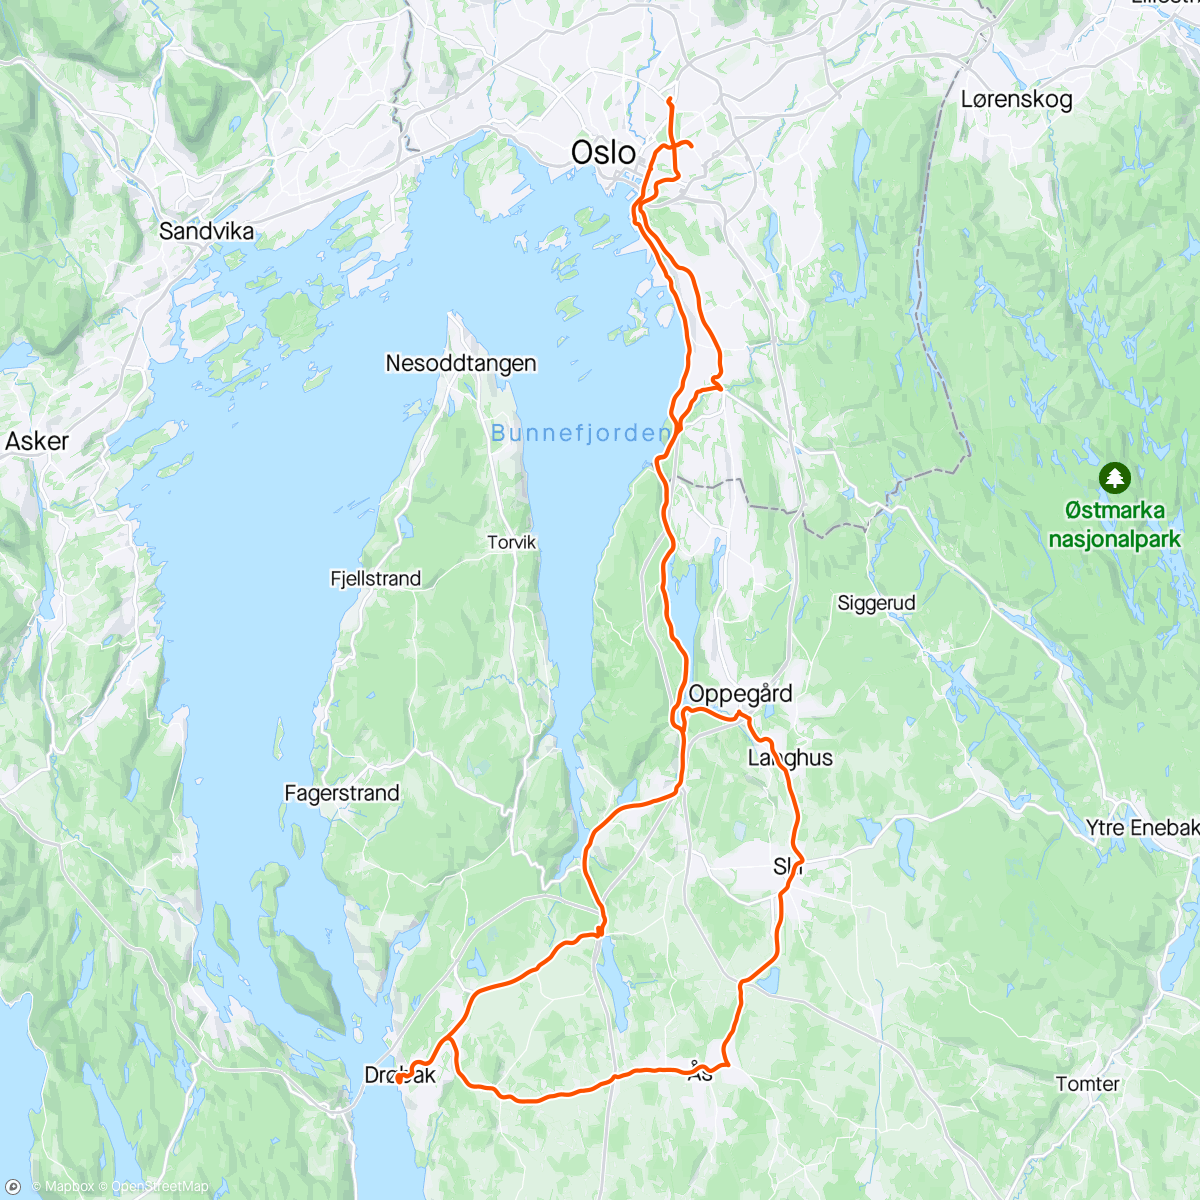 「Drøbak me CZ」活動的地圖